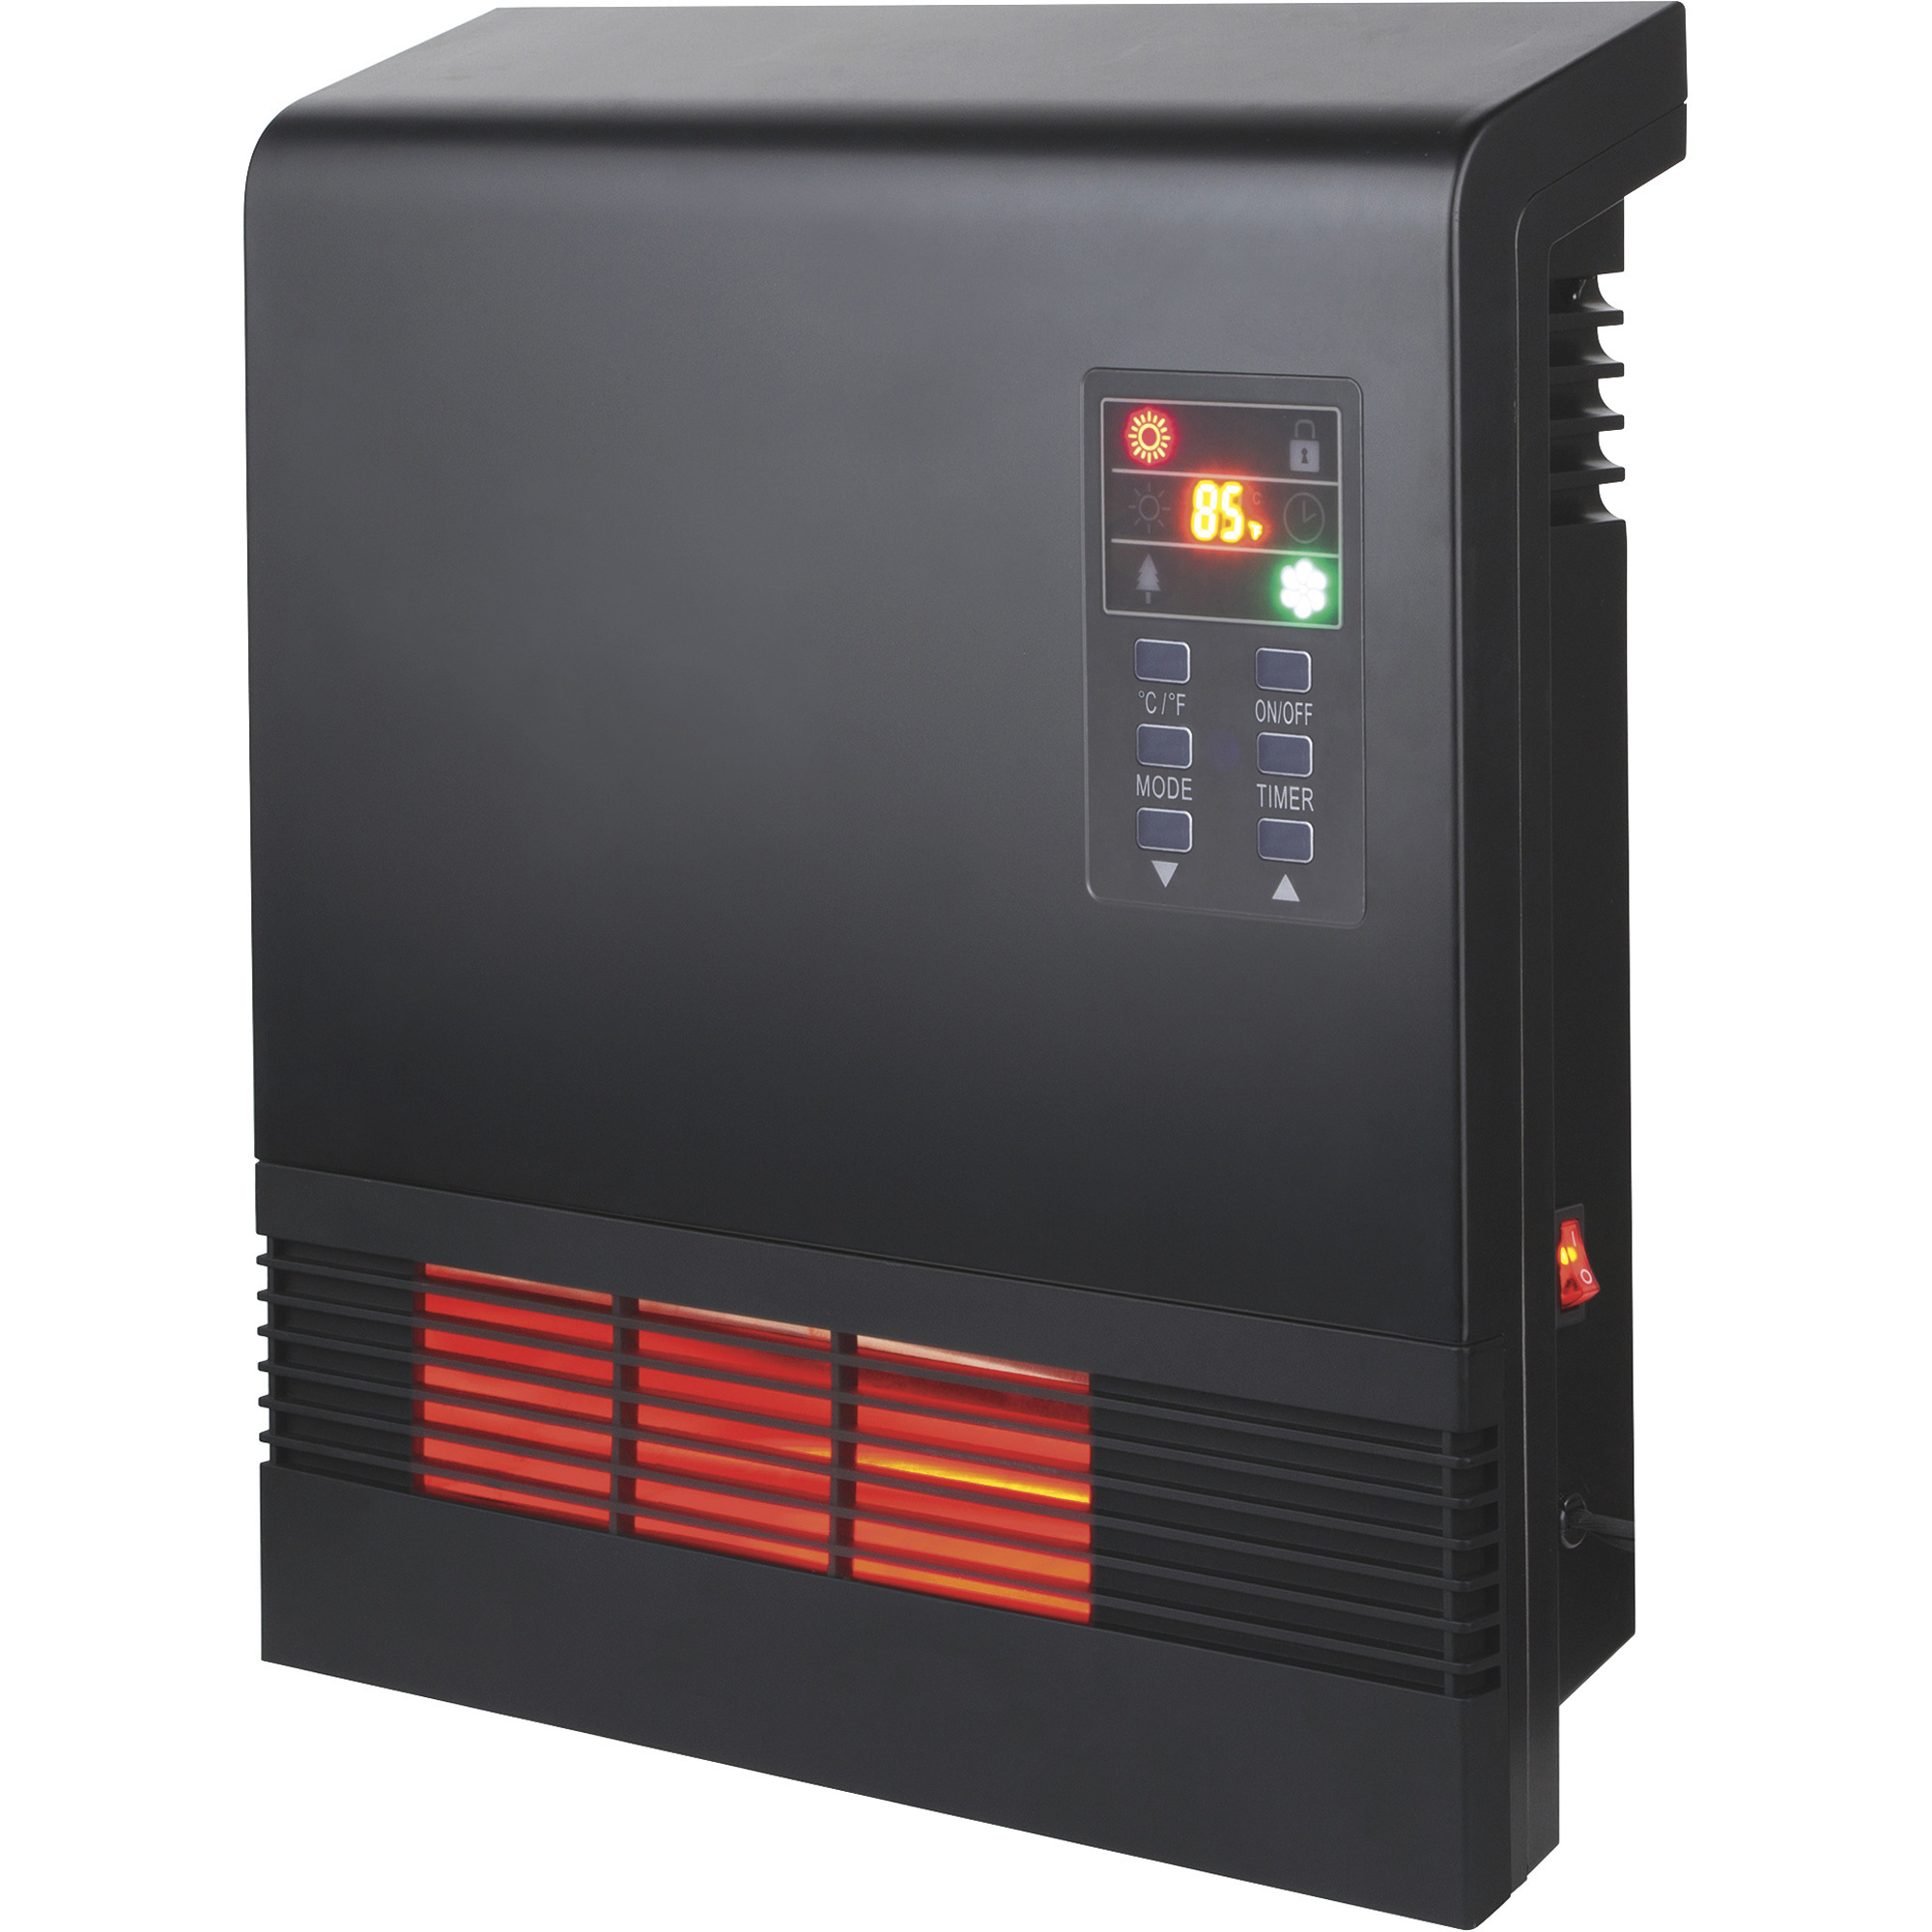 Lifeplus 2-Element Infrared Quartz Wall/Stand Heater, Black, 5120 BTU, 120 Volt, Model IPH-01B